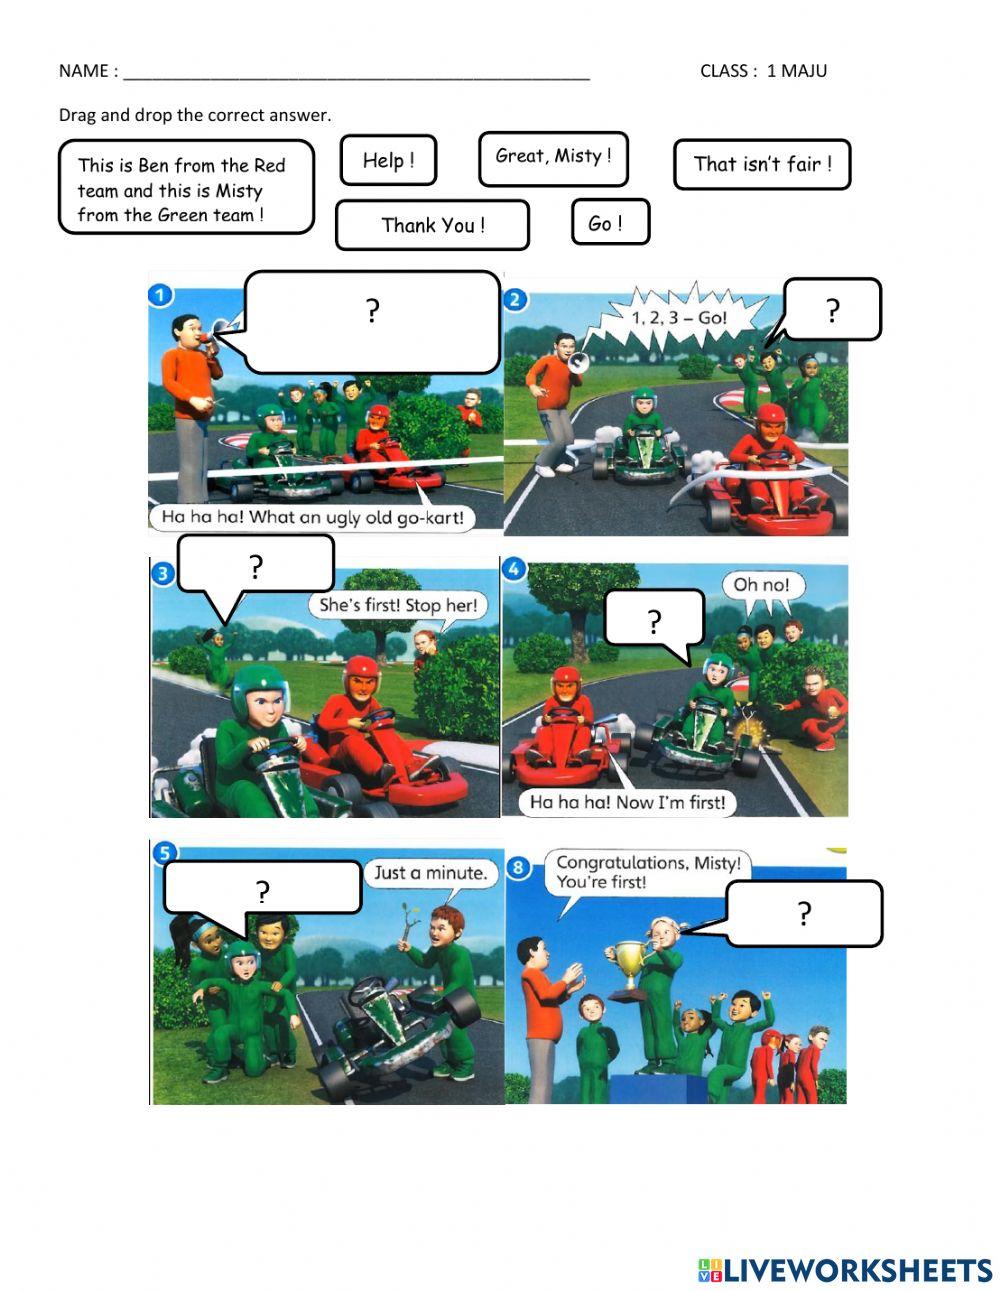 Unit 2: Let's Play ( The go-kart race)